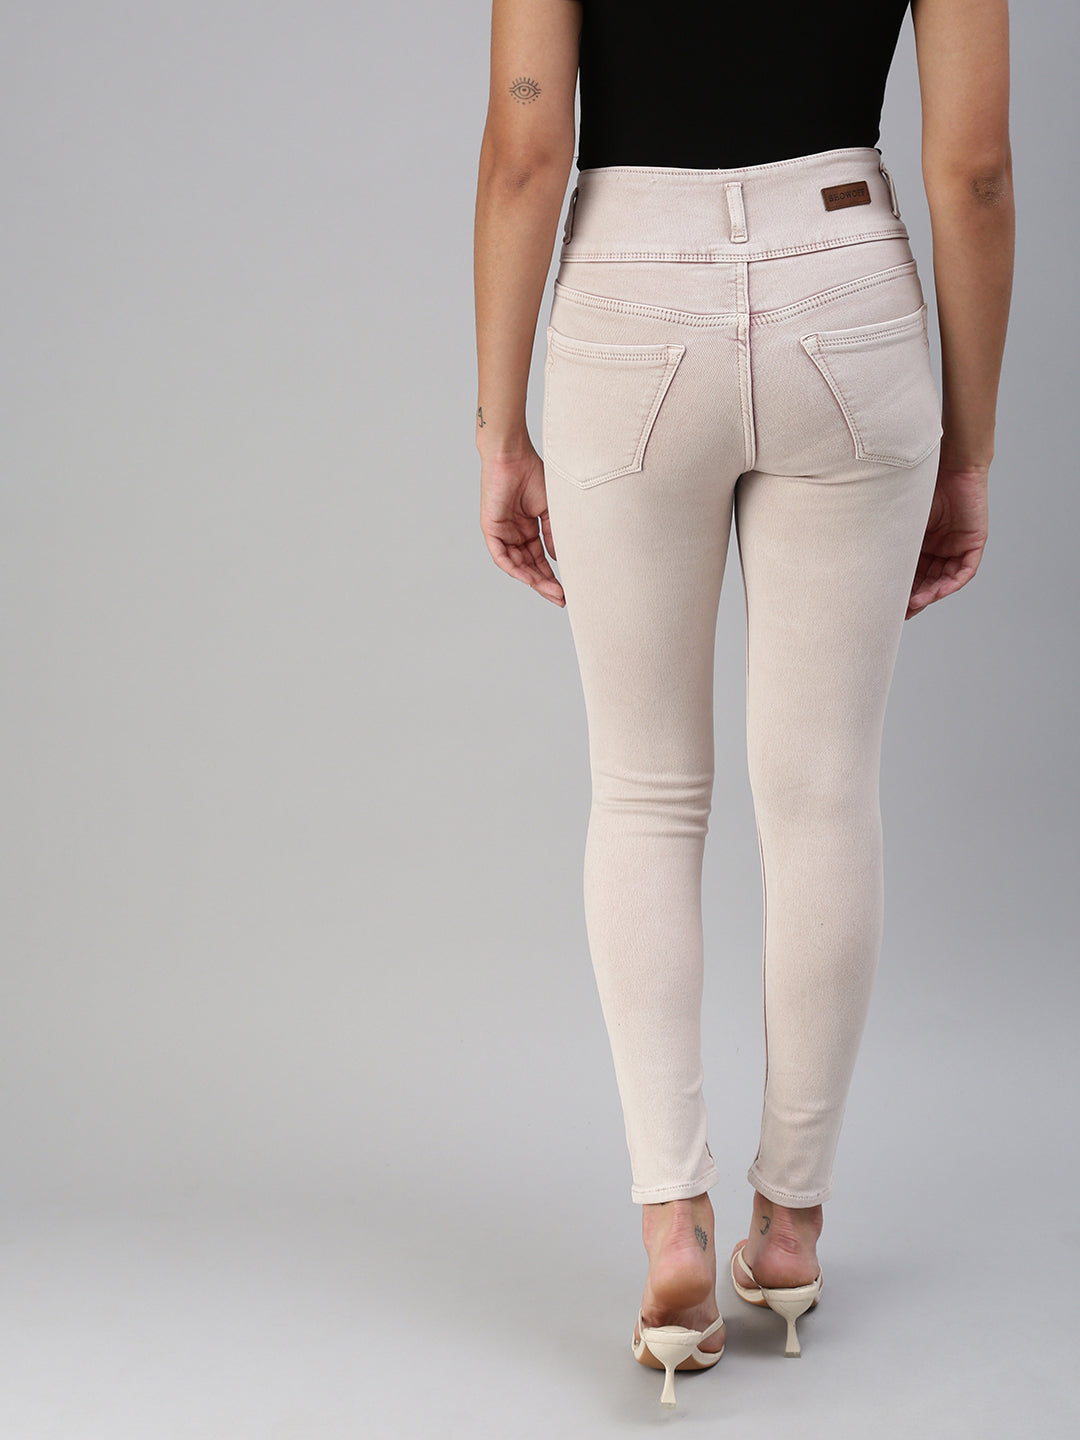 Women's Pink Solid Denim Skinny Jeans